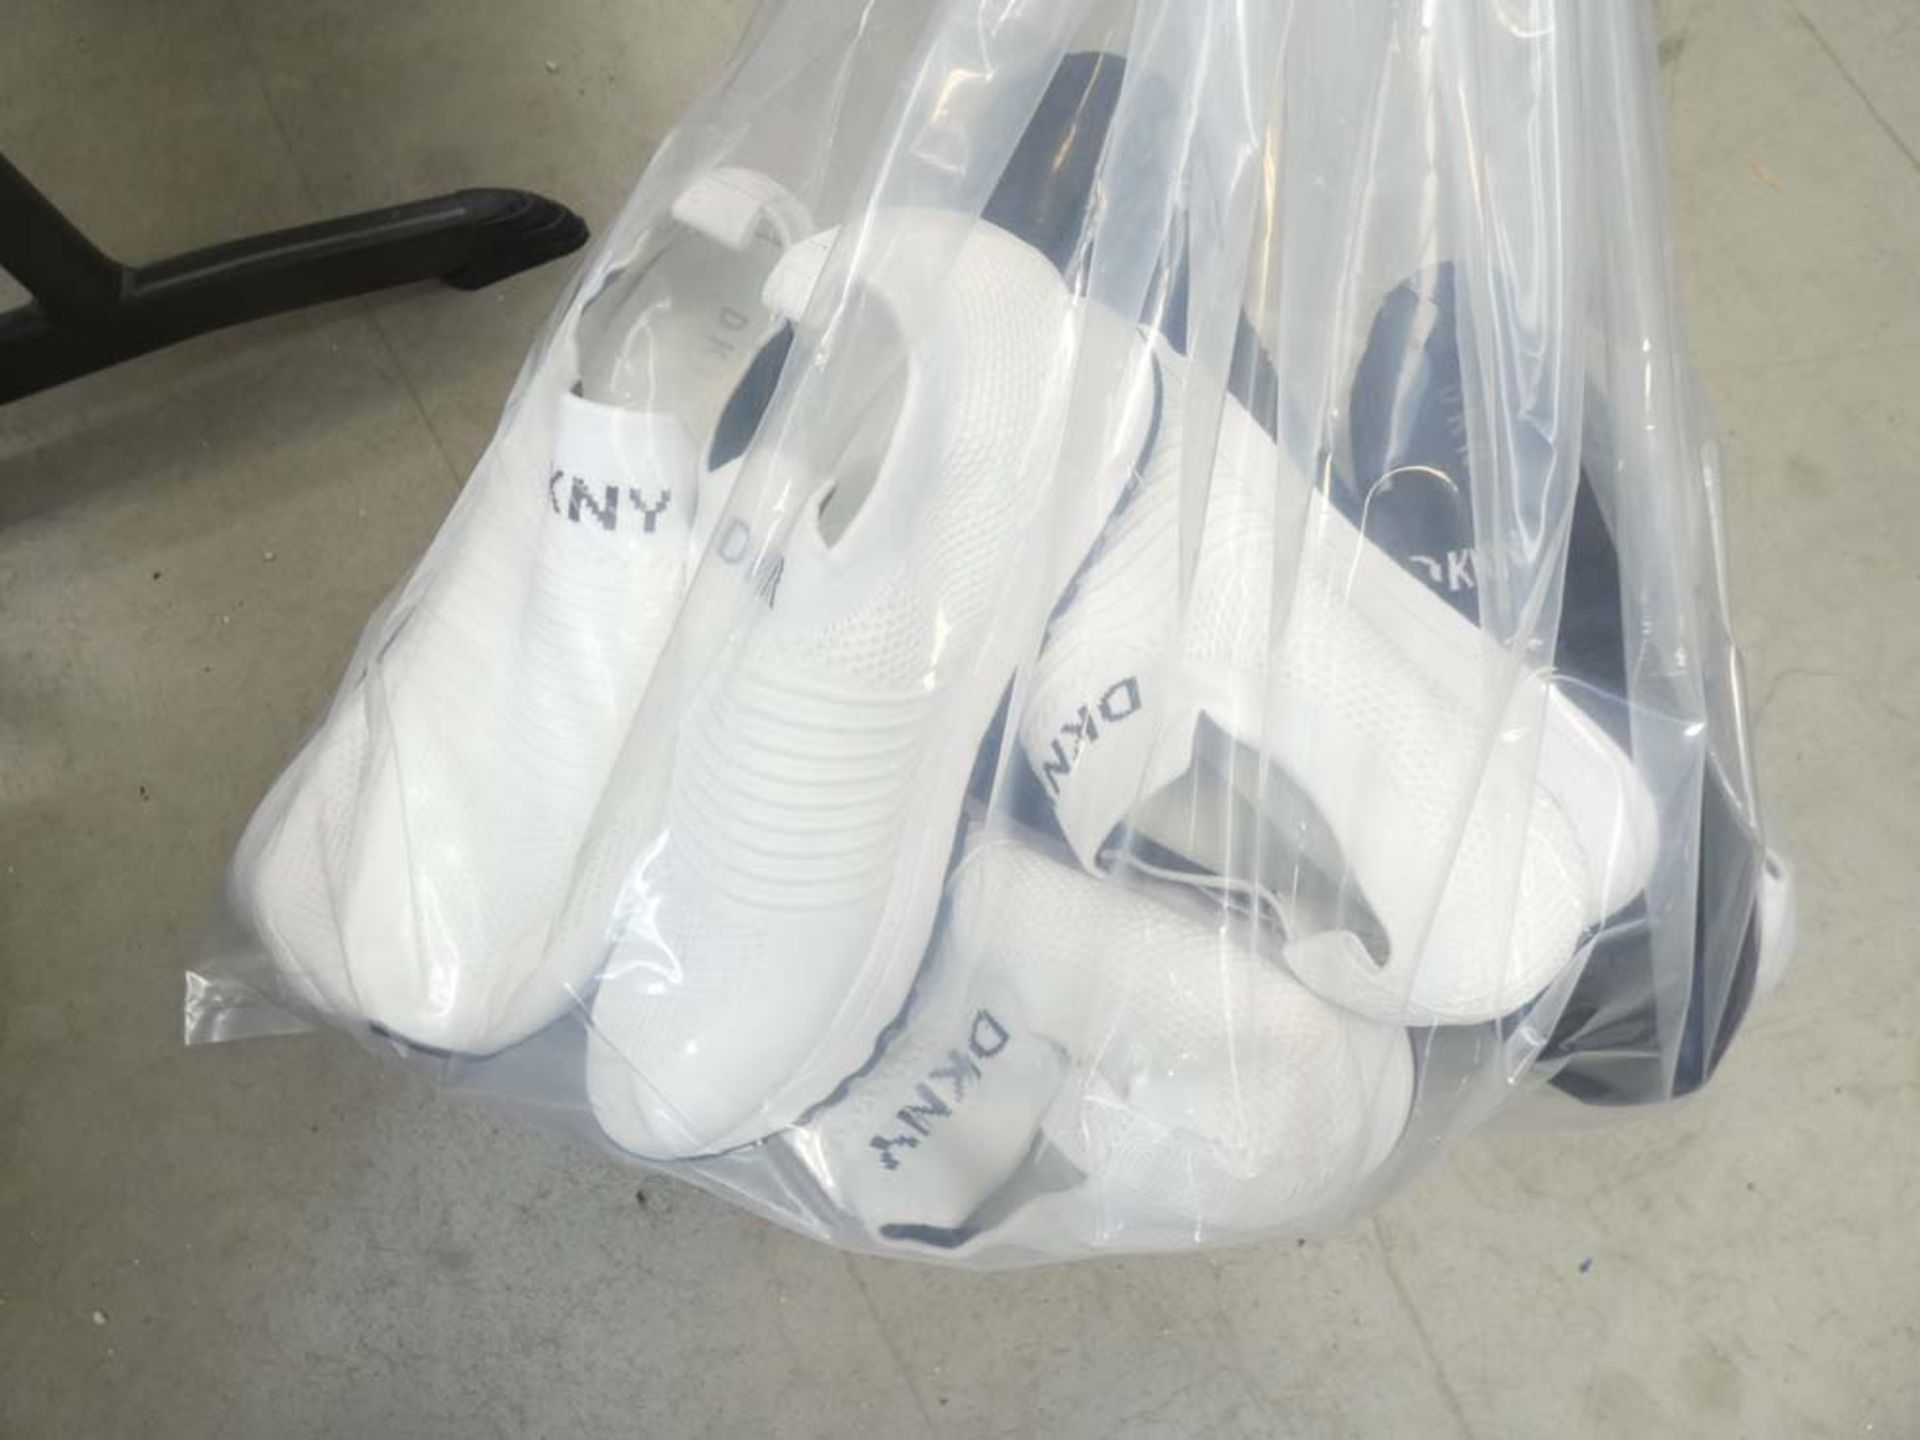 Bag of odd DKNY shoes